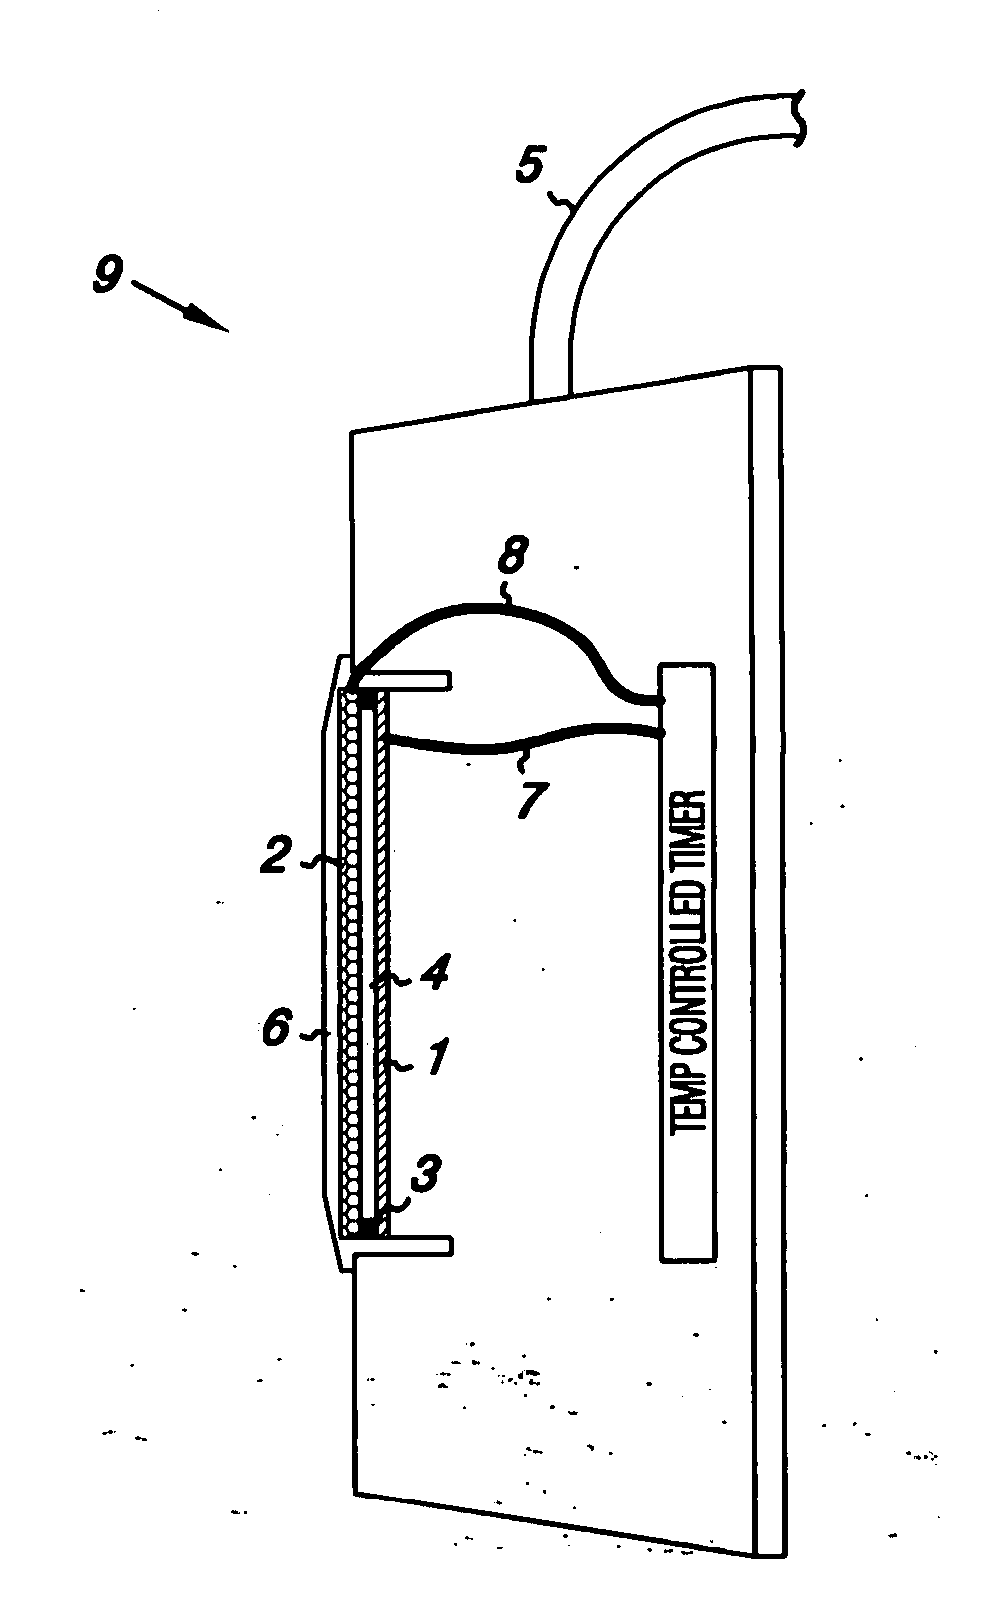 Flow-through oxygenator